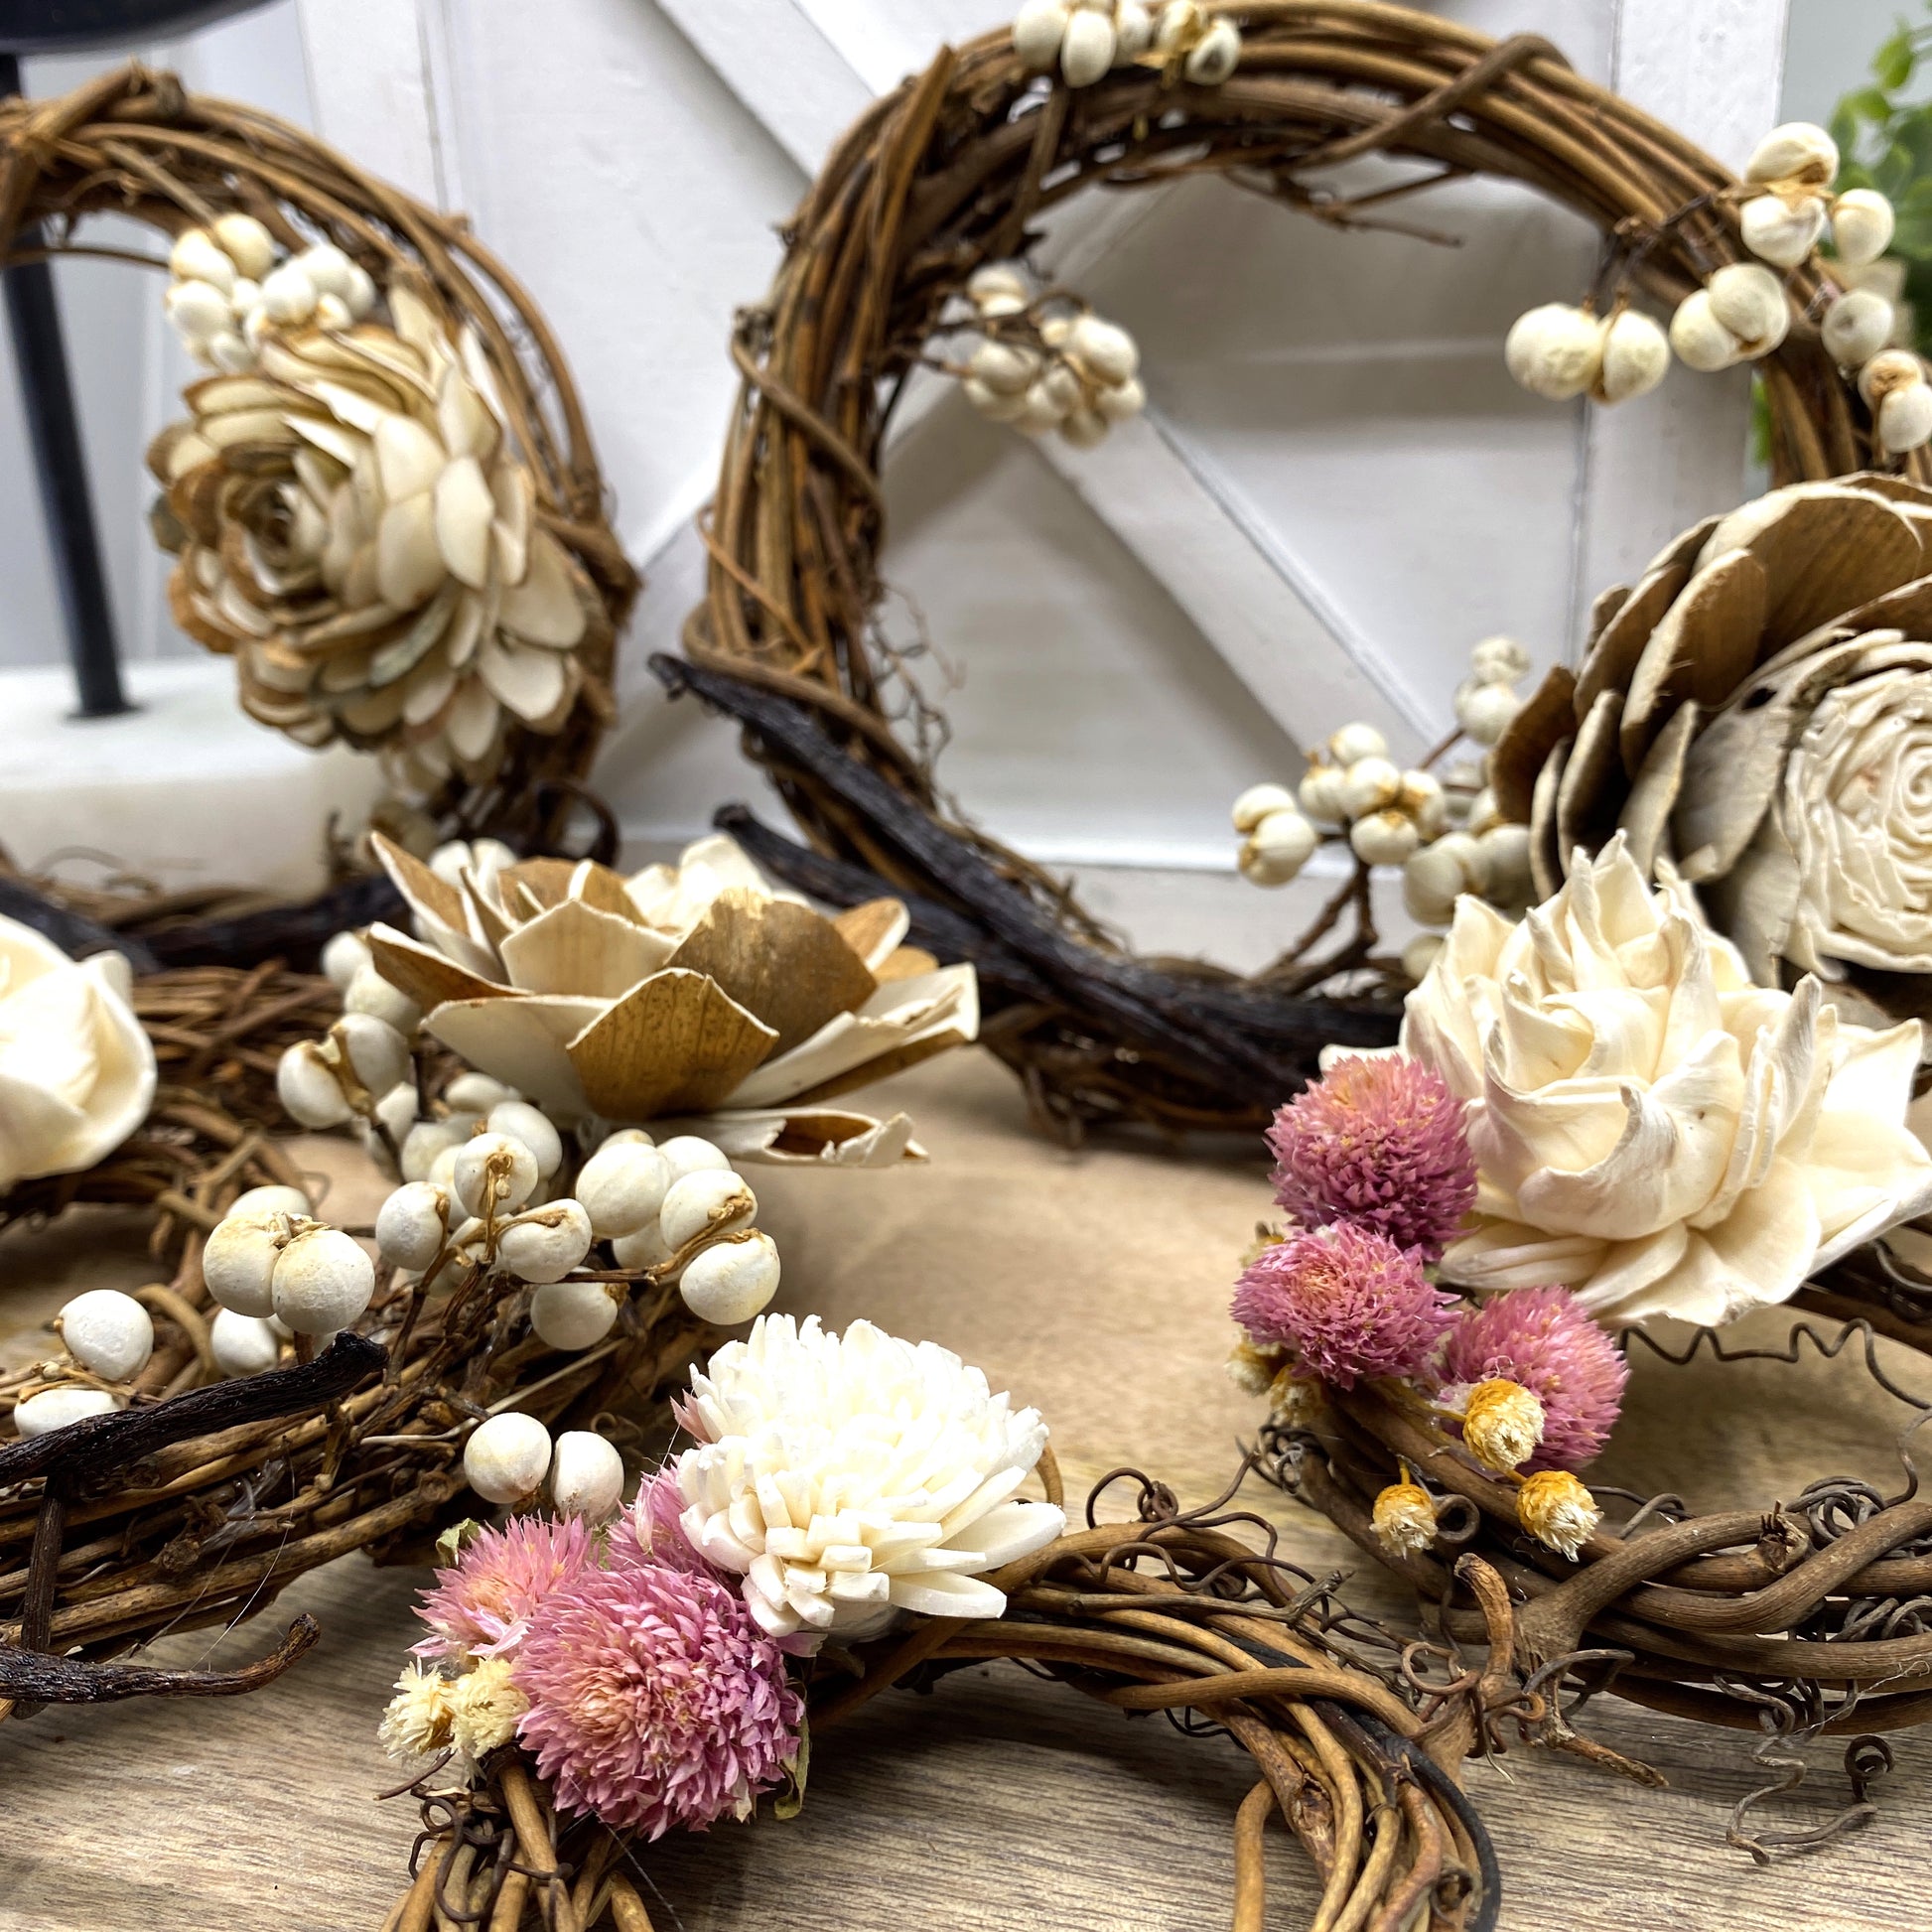 Vanilla Bean, Grapevine Wreath Ornaments with Dried Flowers, 6” Sunsum®